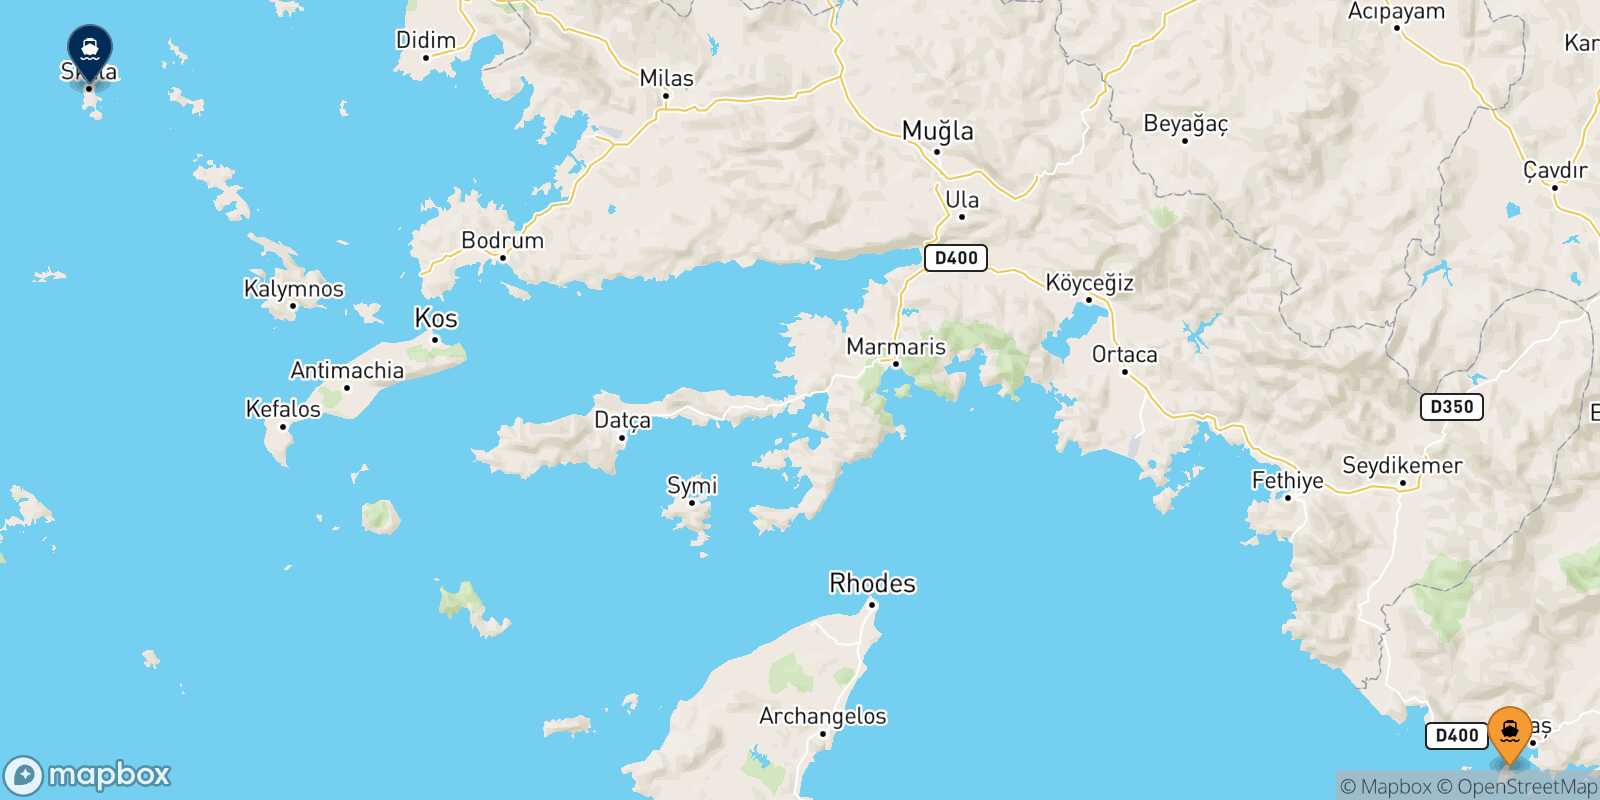 Kastelorizo Patmos route map